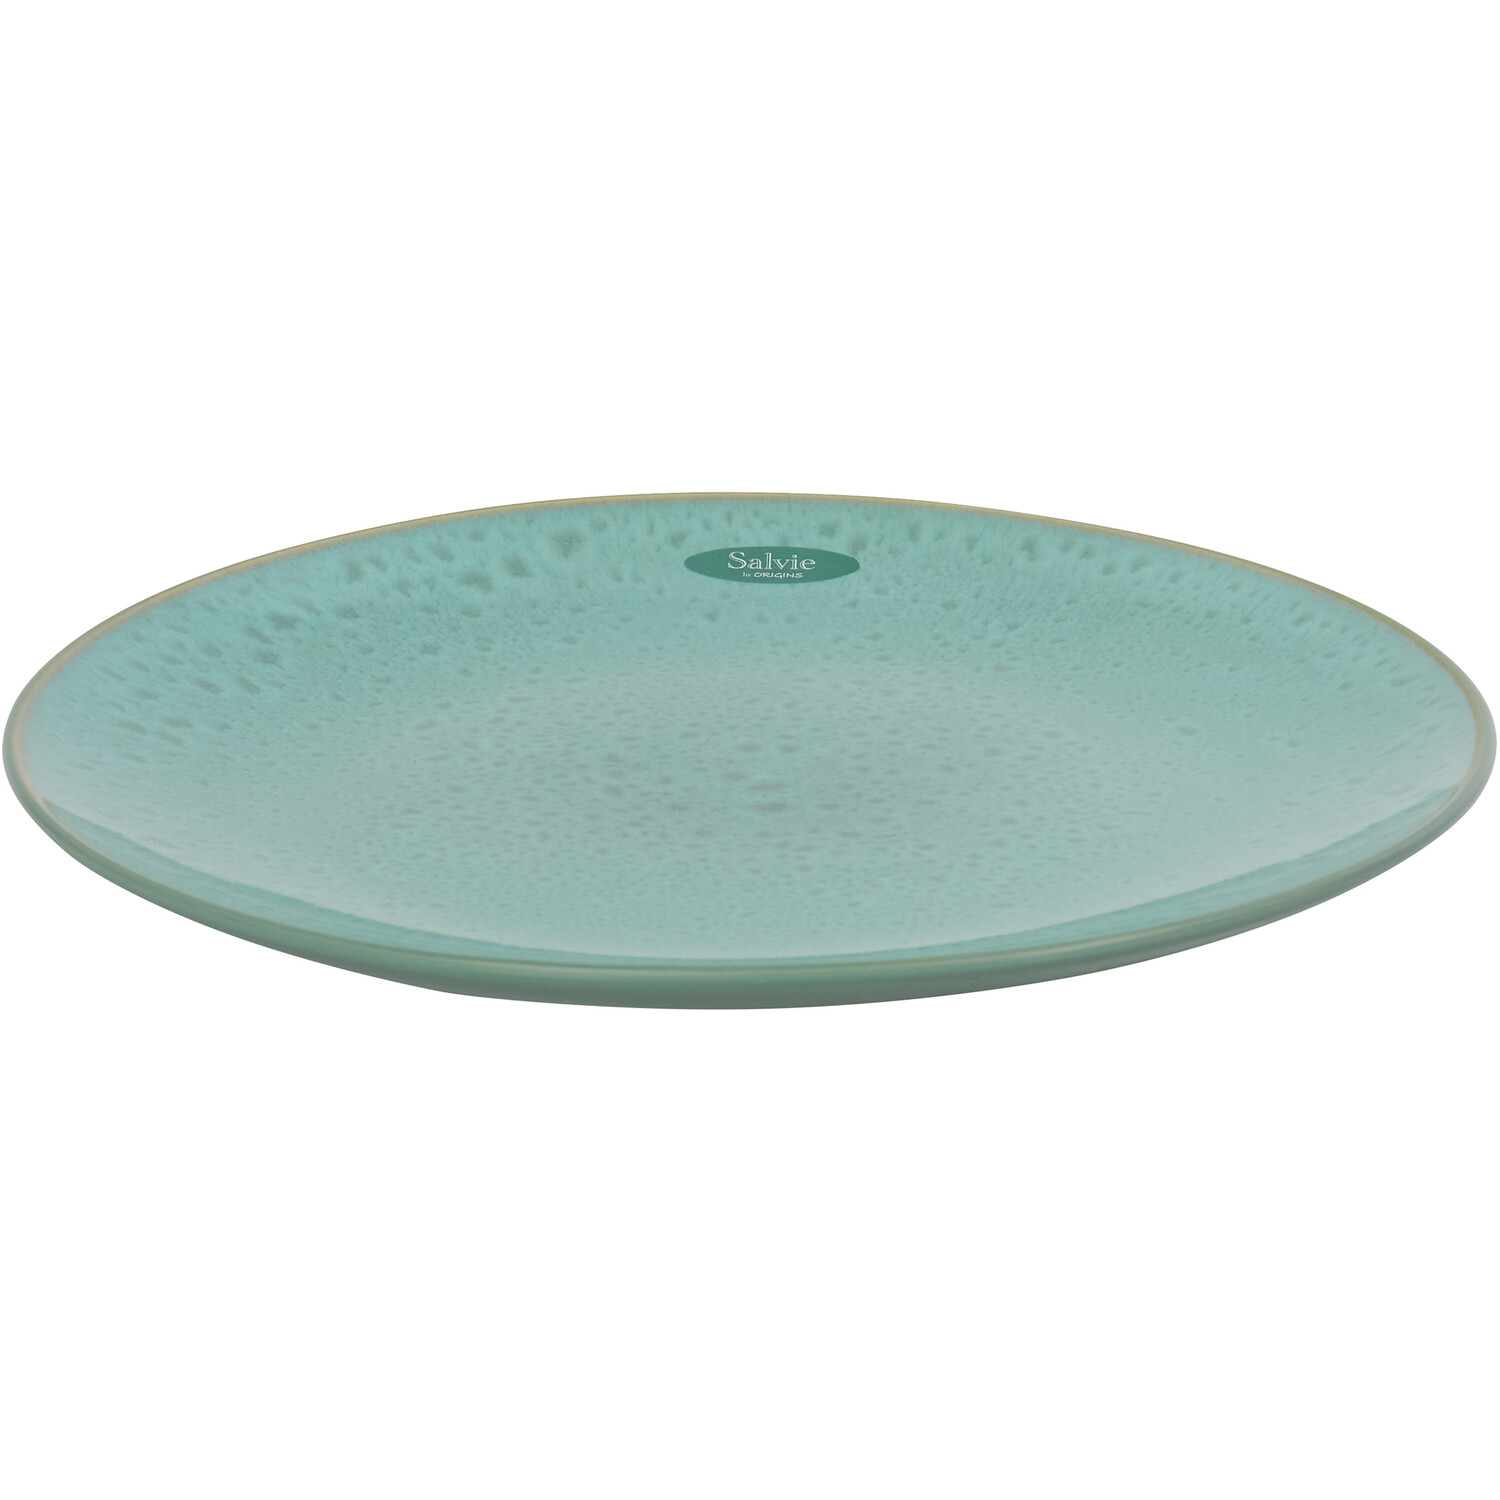 Salvie Reactive Glaze Plate - Sea Green / Dinner Plate Image 3